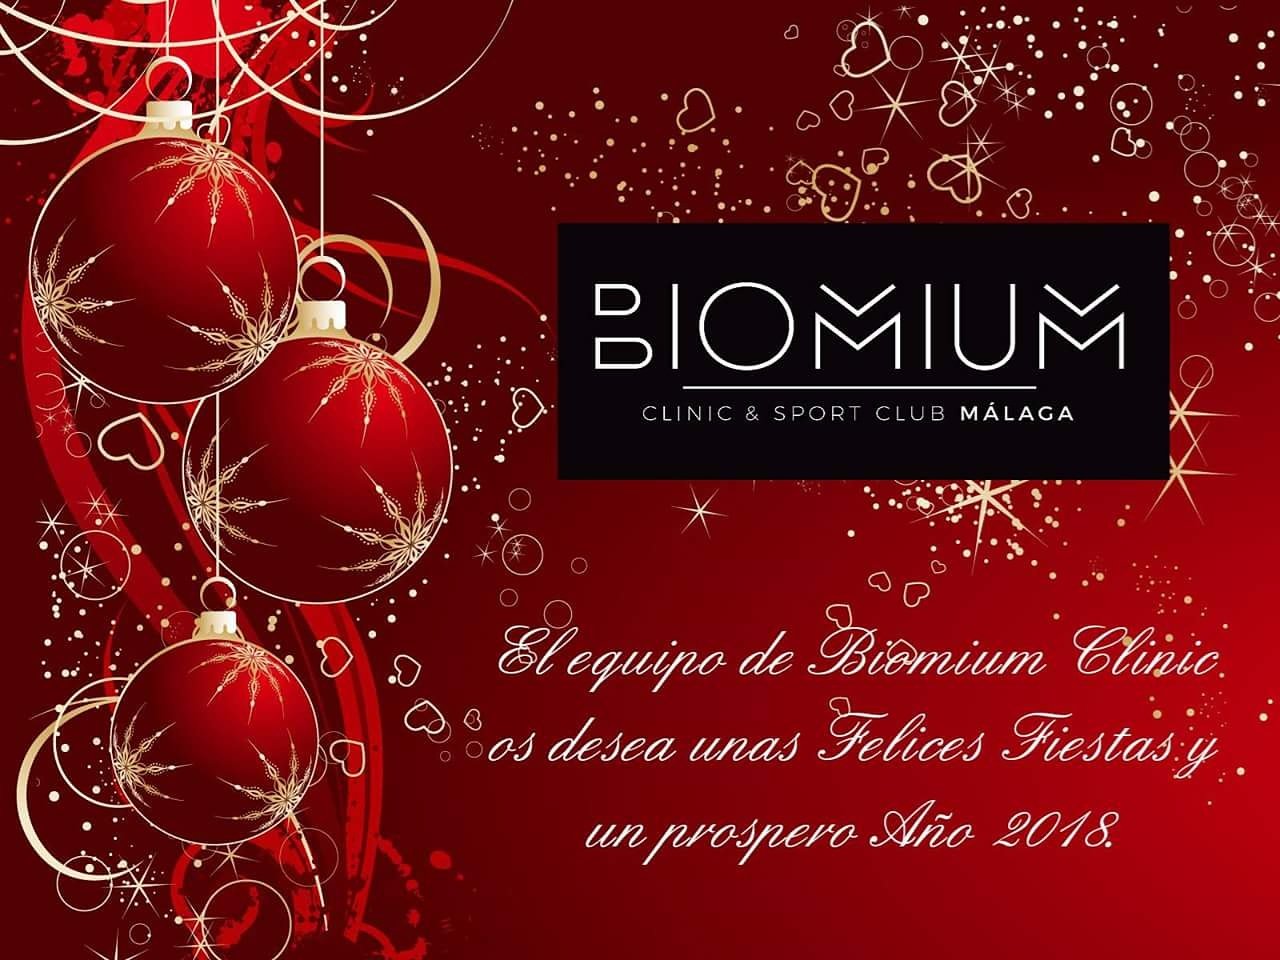 Biomium Clínic（@Biomiumclinic）さん / Twitter